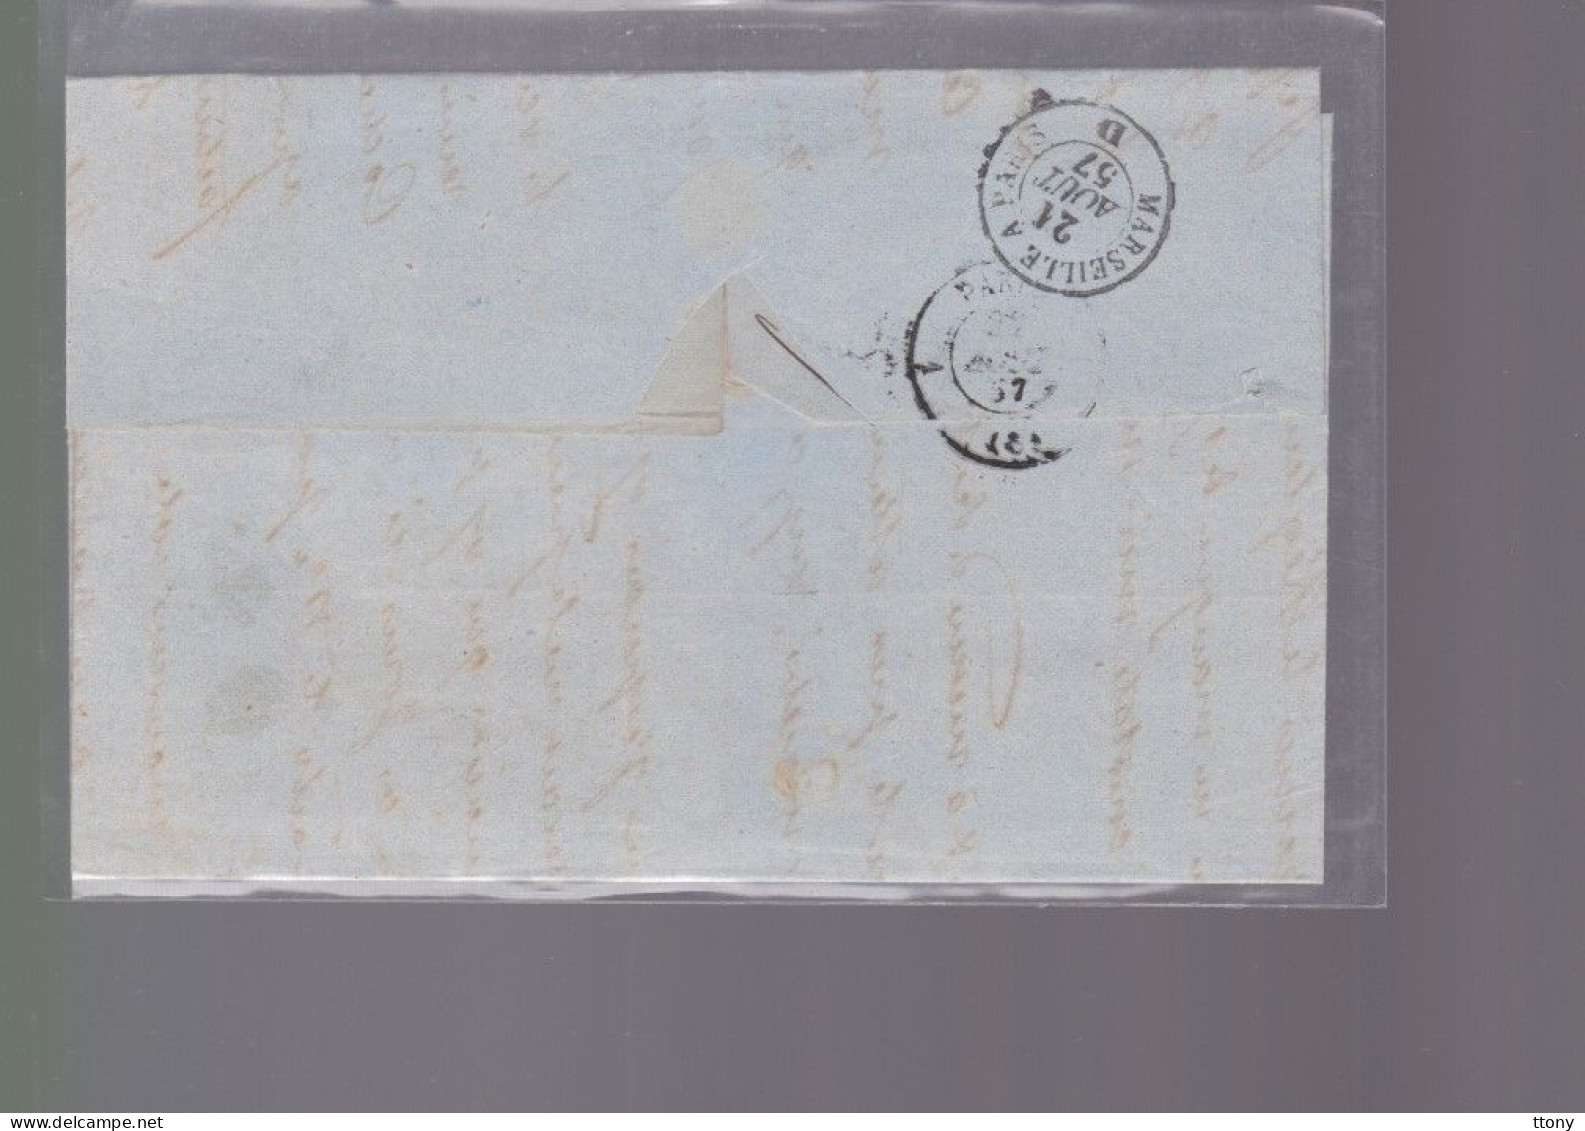 Un  Timbre  Napoléon III   N°  14     20 C Bleu   Sur  Lettre      1854   Destination    Grandvilliers - 1849-1876: Periodo Clásico